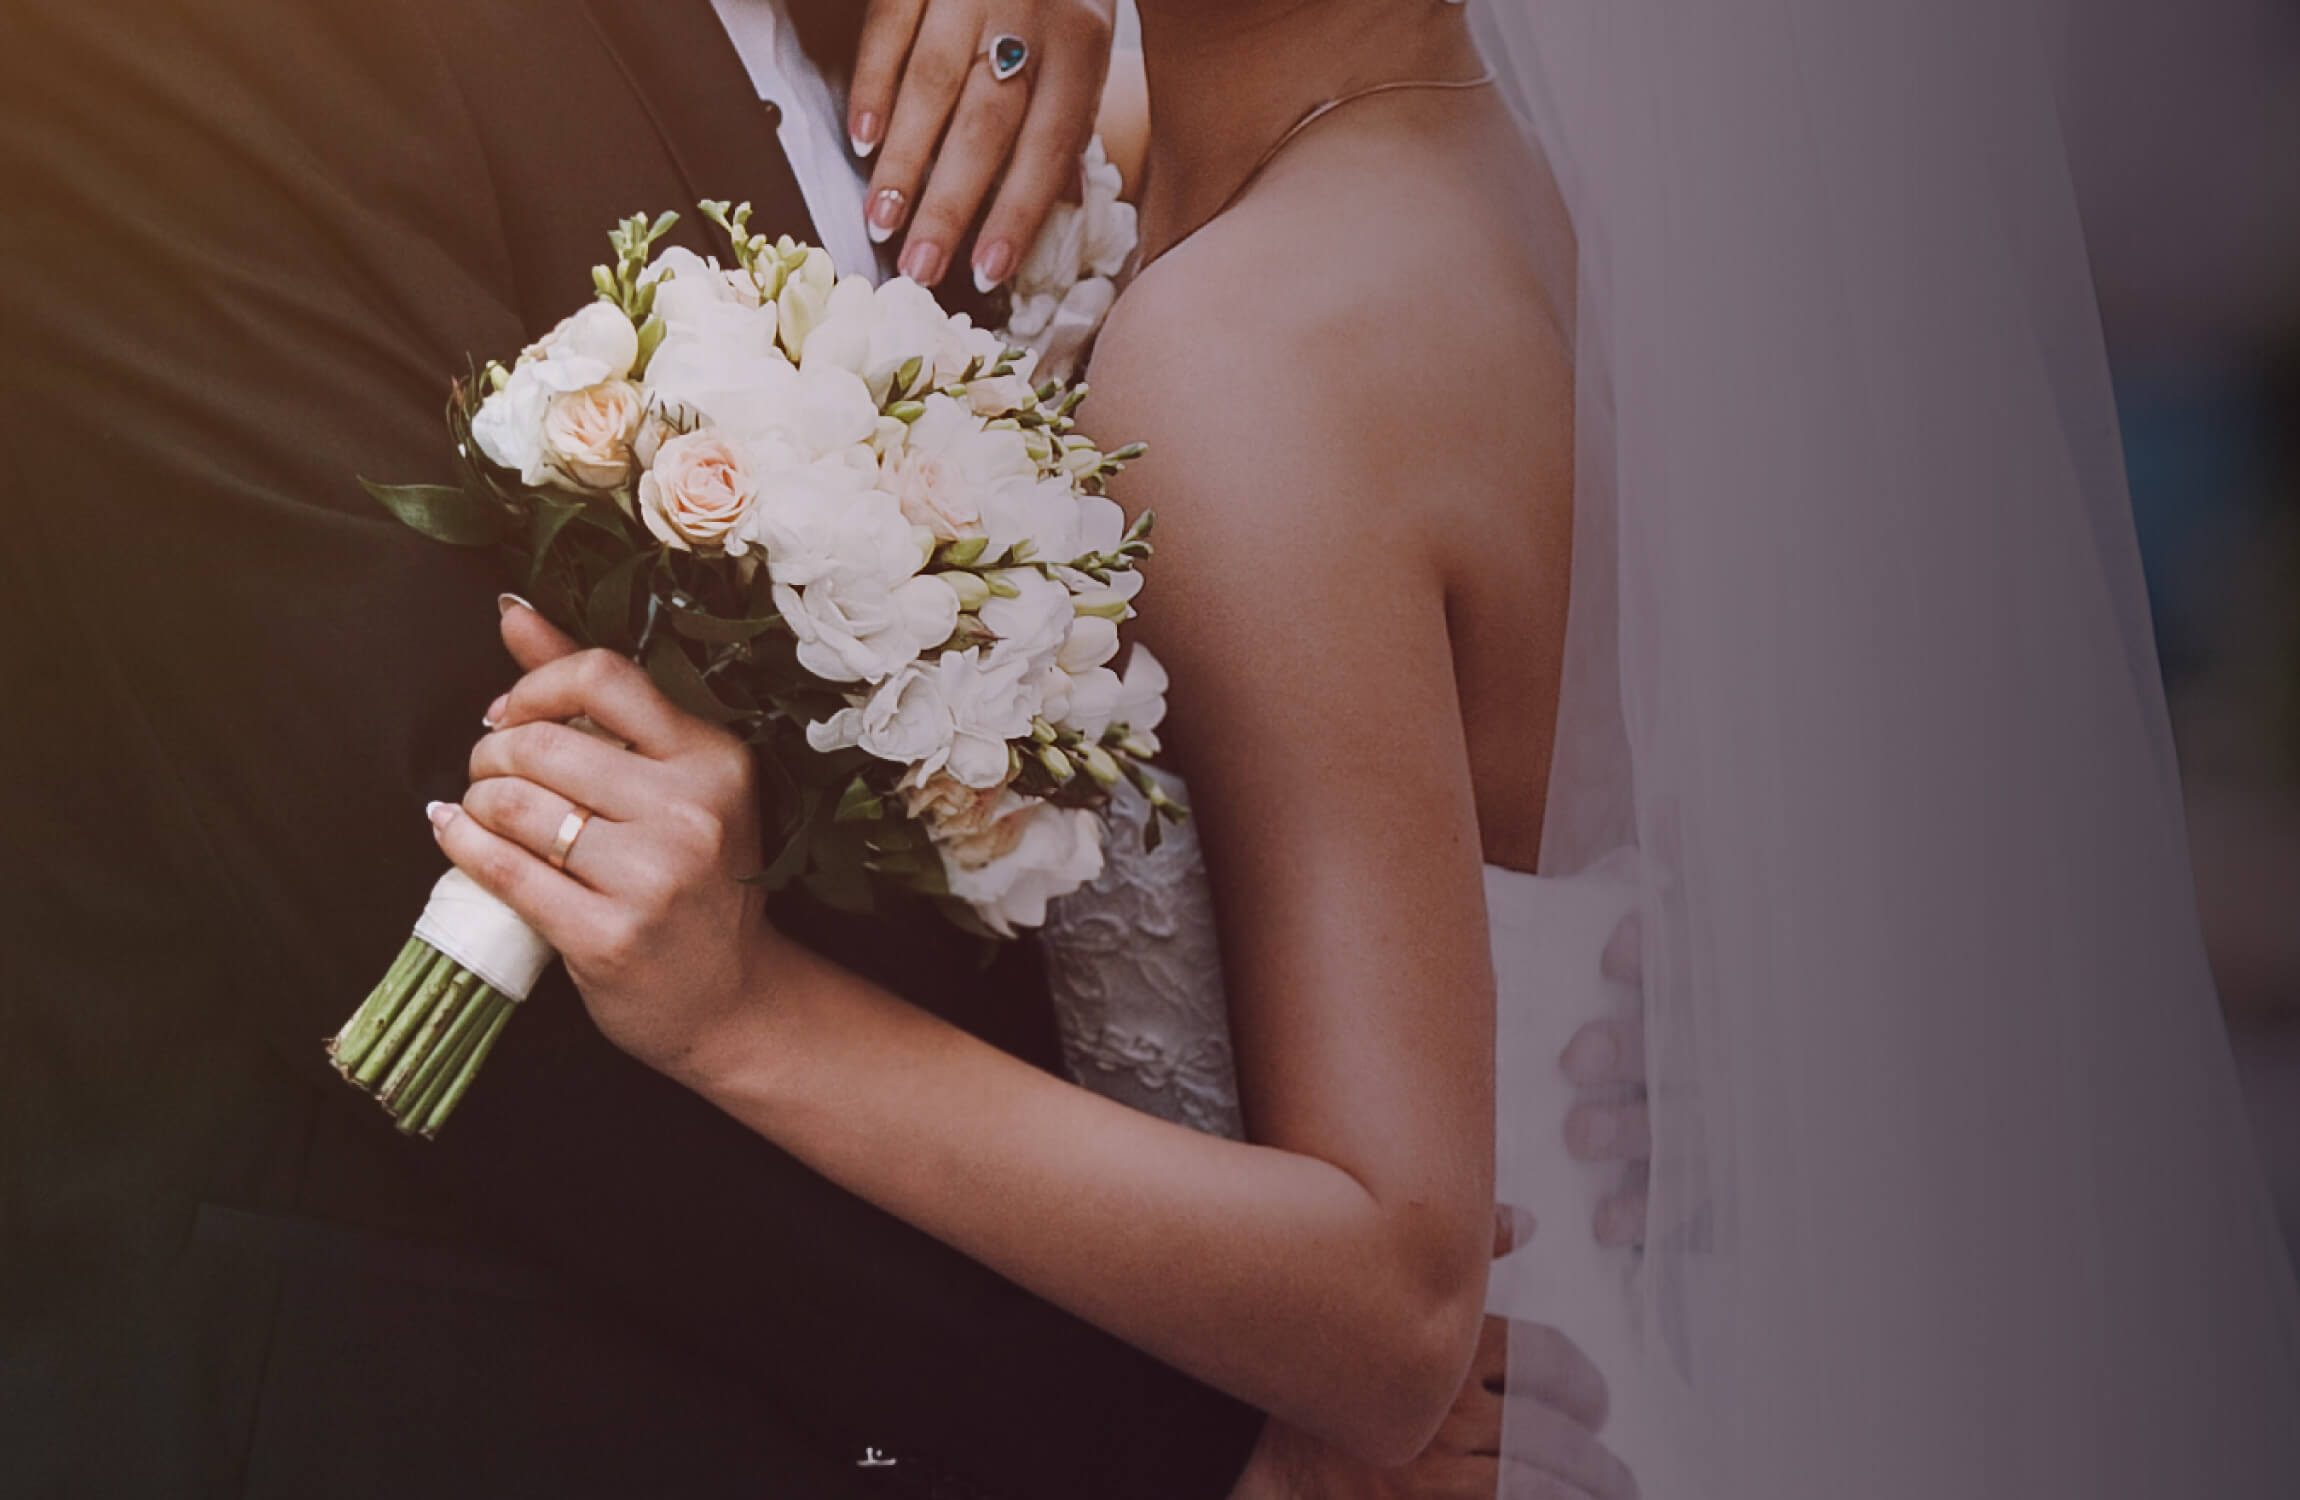 Меню на свадьбу: варианты свадебного банкета и фуршета